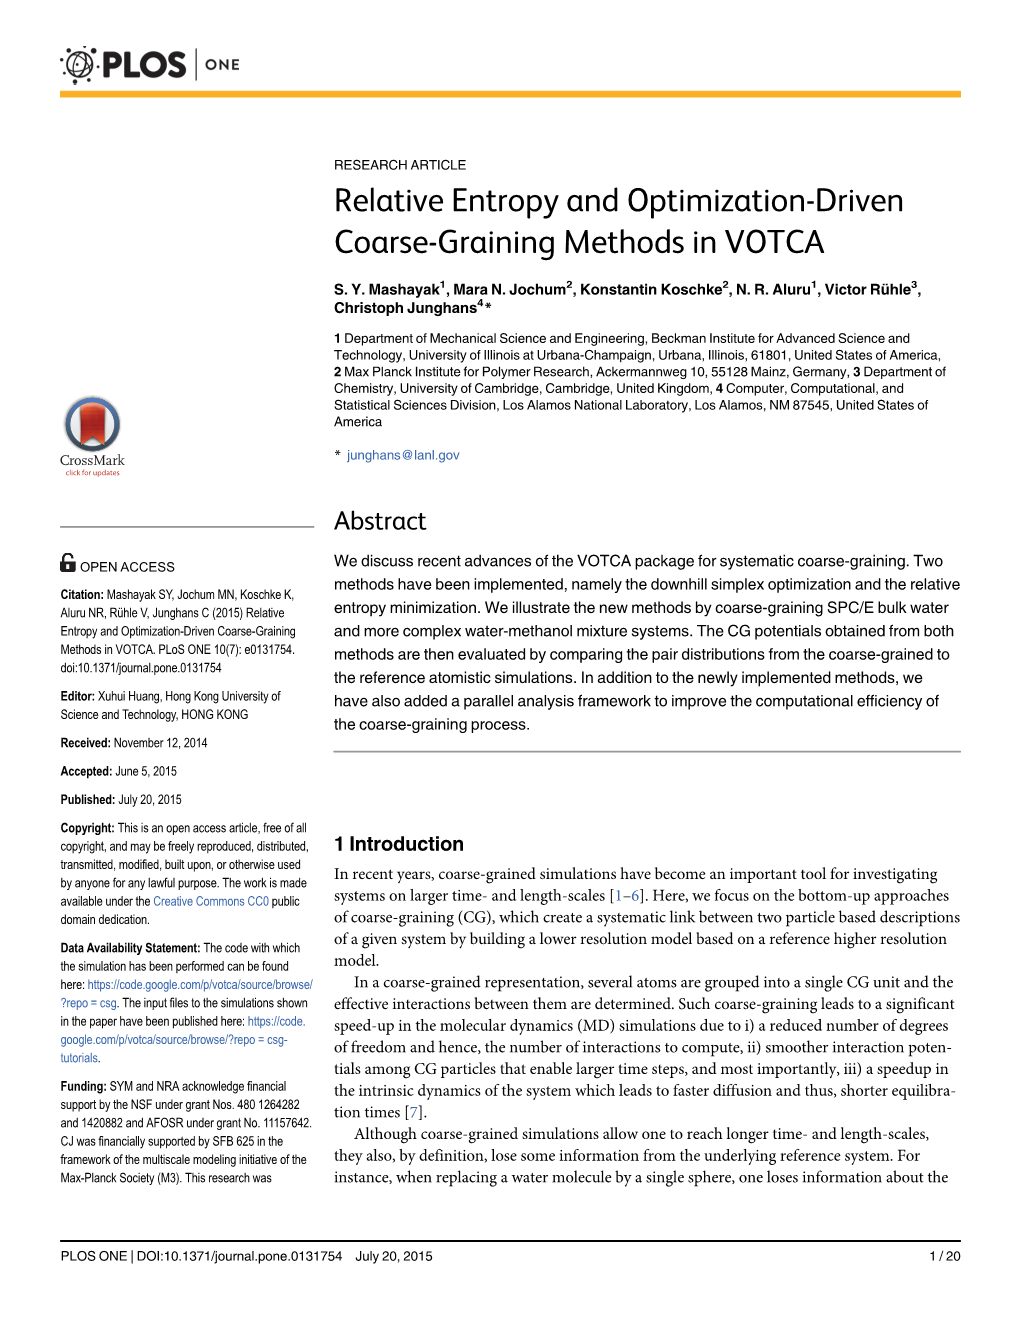 Relative Entropy and Optimization-Driven Coarse-Graining Methods in VOTCA